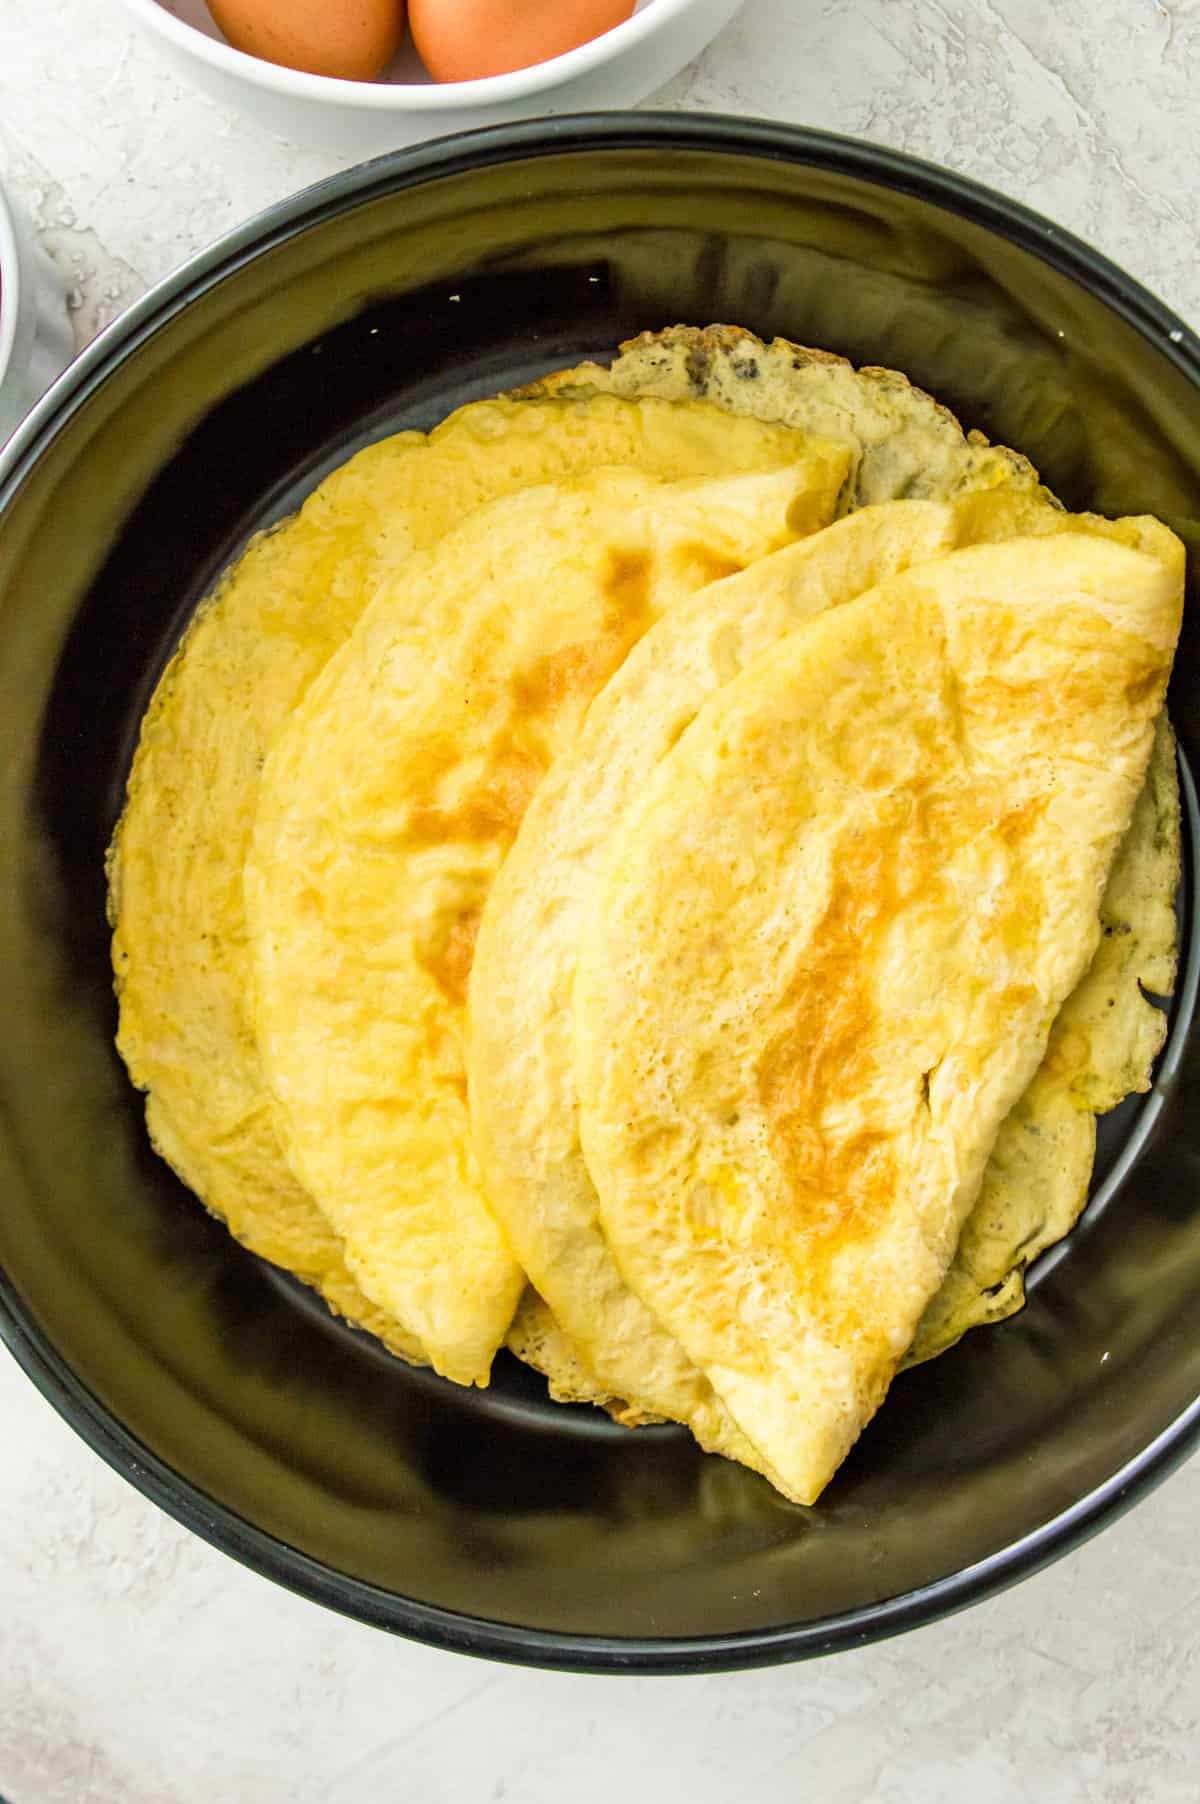 Egg wraps folded in half in a black frying pan.